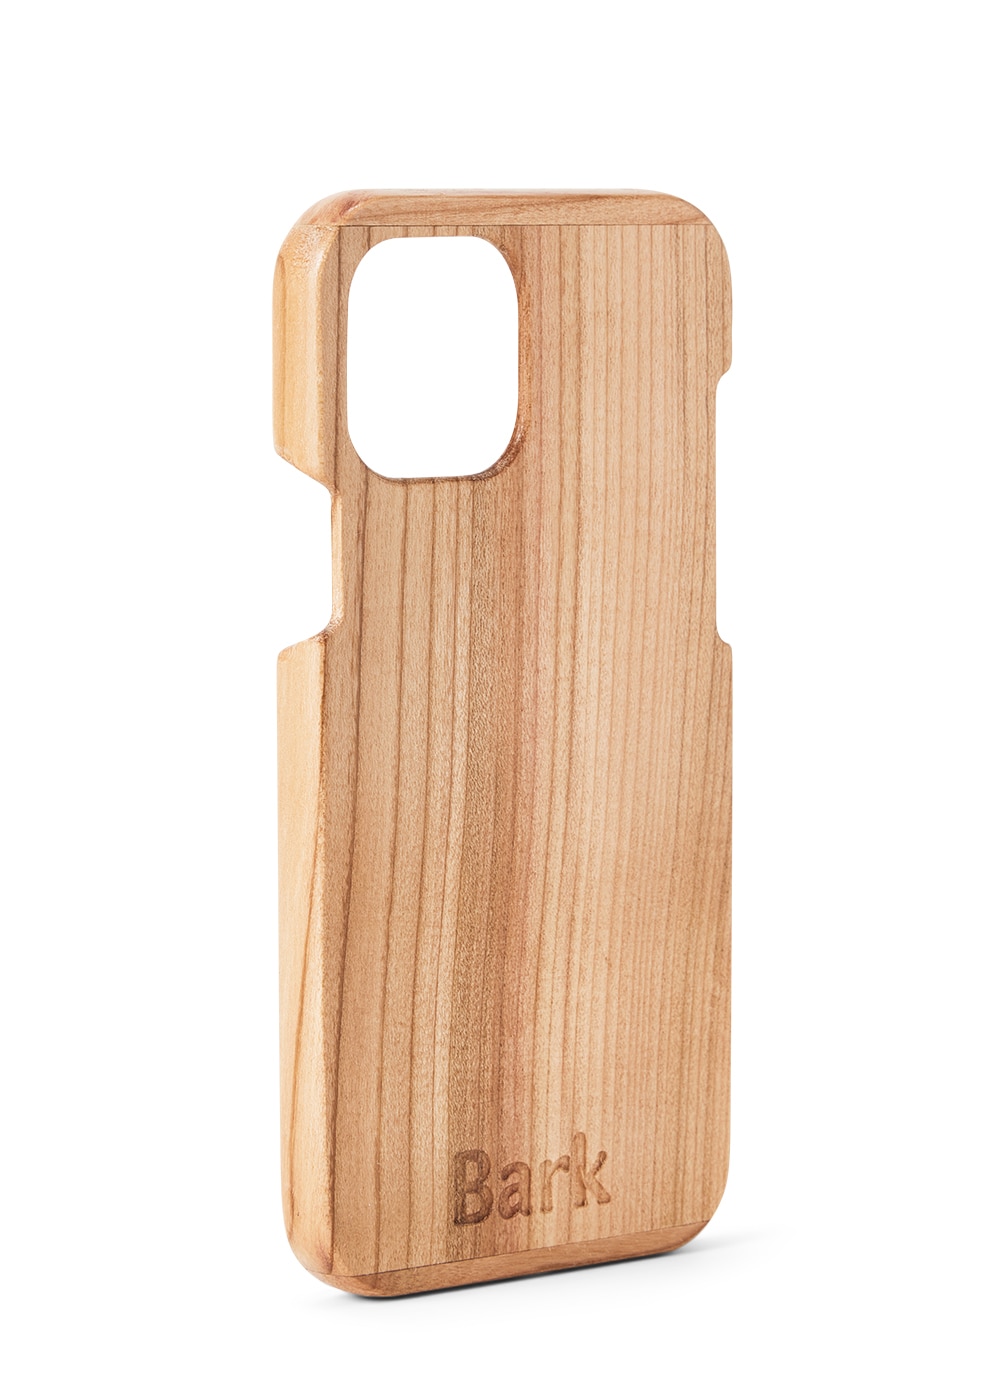 iPhone 12 Pro case made of Swedish hardwood - Körsbär